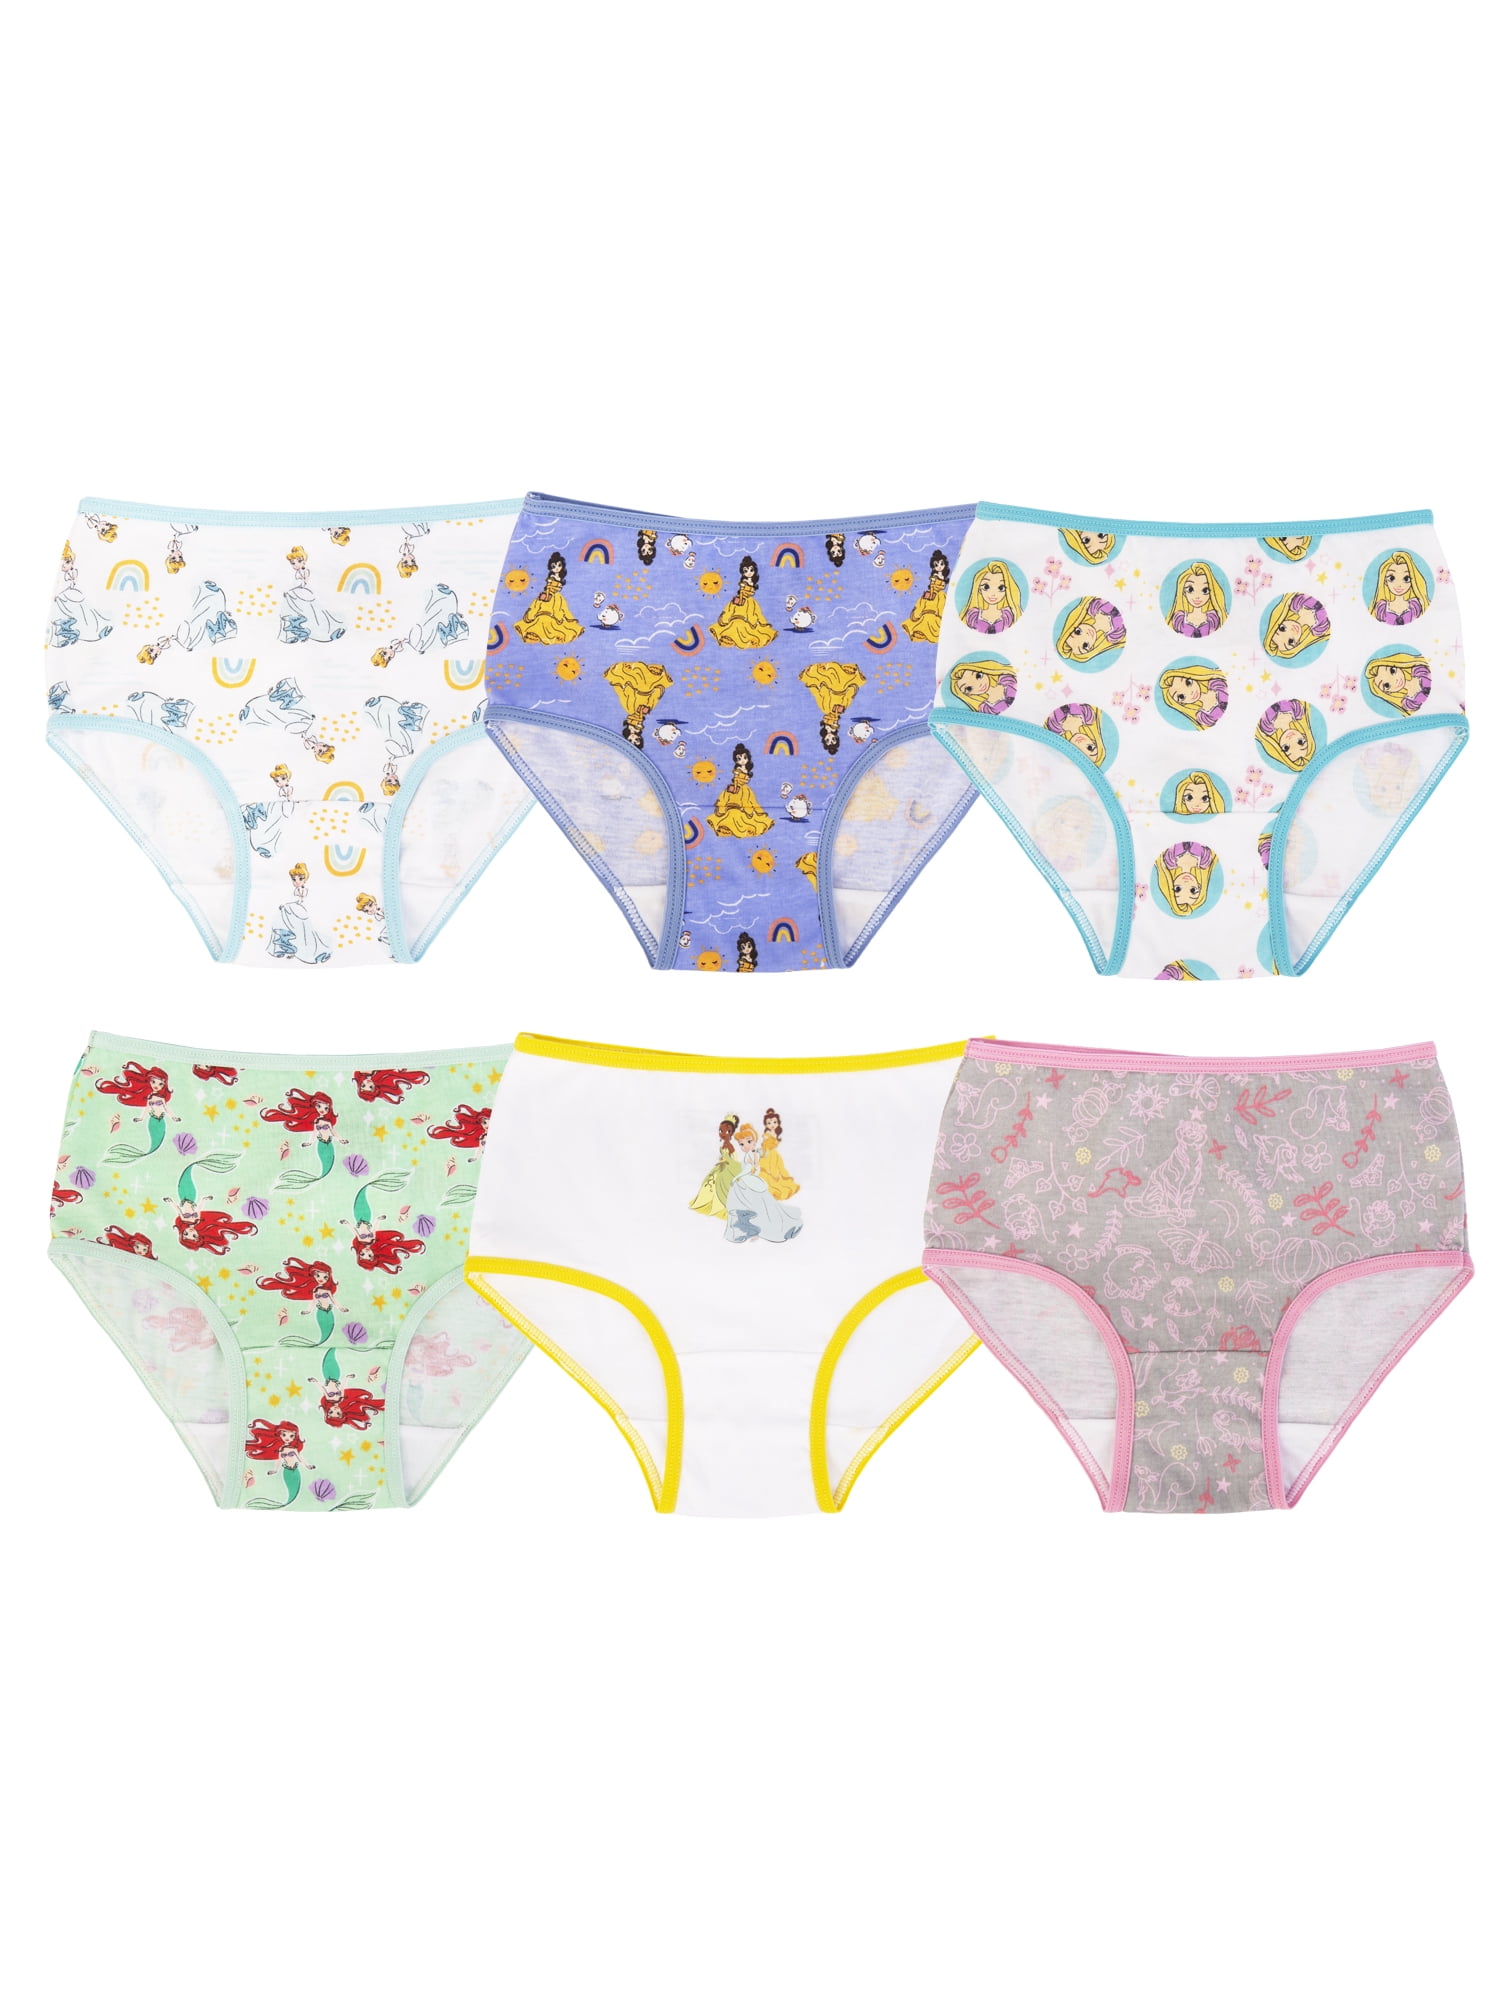 Princess Toddler Girls Underwear, 6 Pack Sizes 2T-4T 